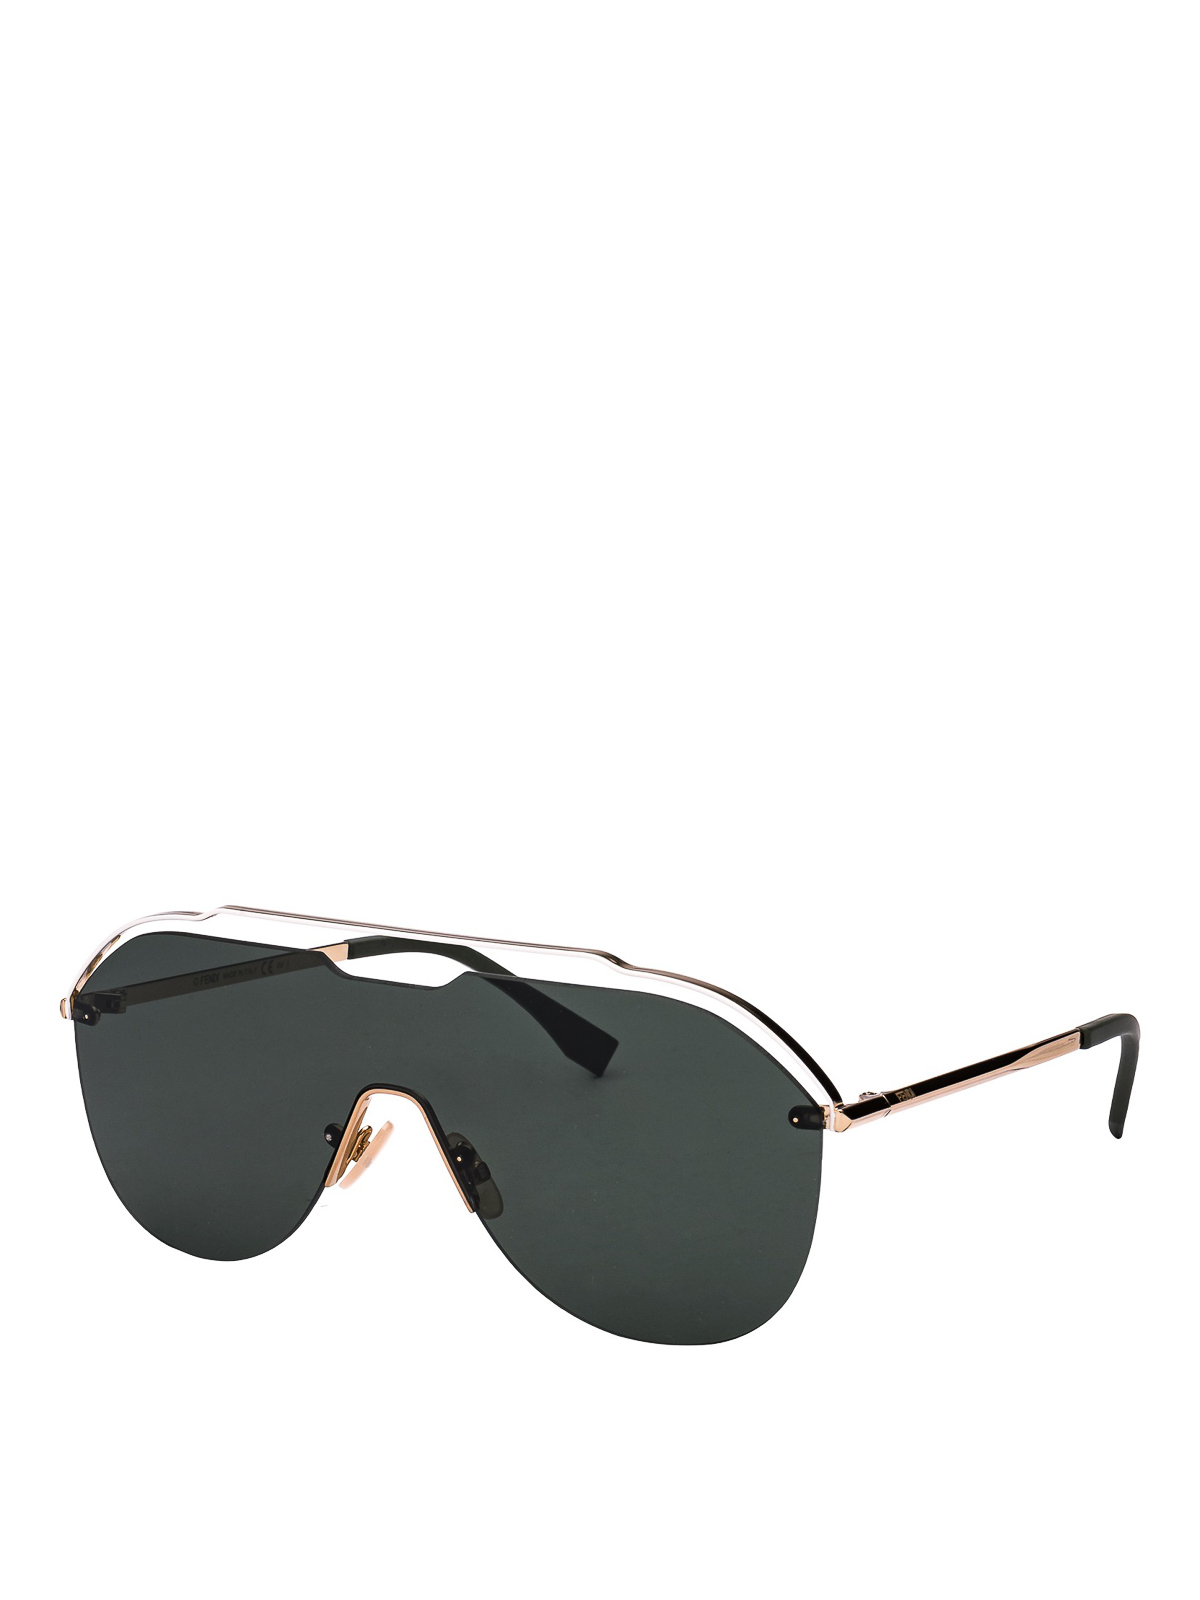 Fendi Fancy dark green sunglasses 